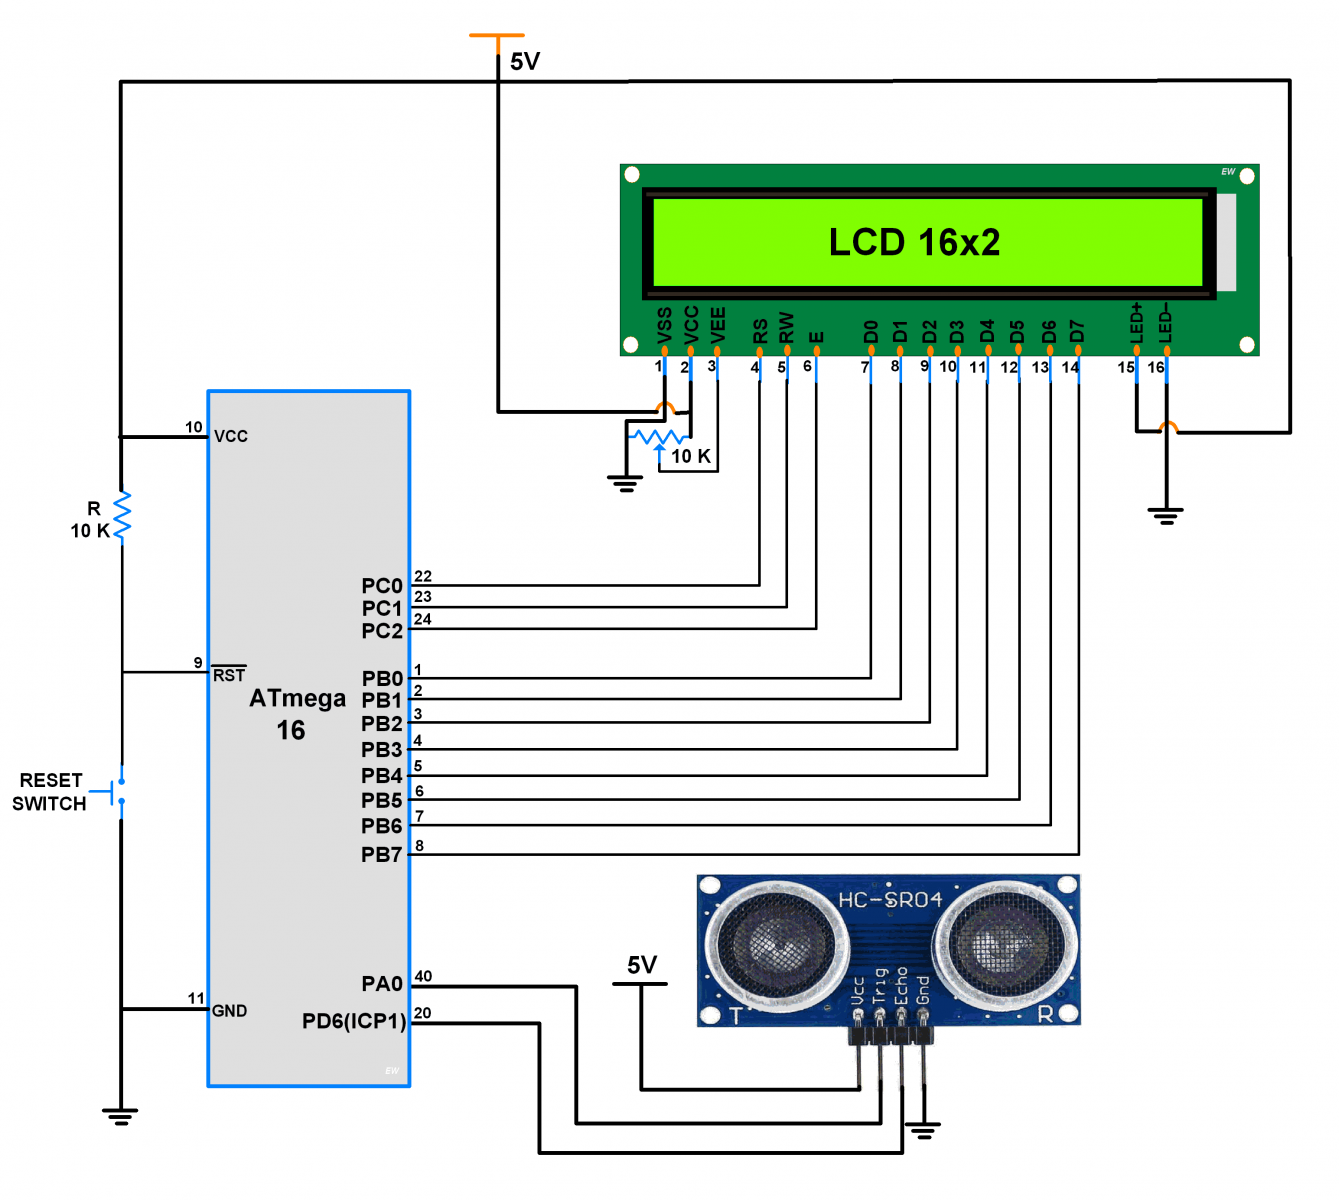 Ultrasonic HCSR04 interface with ATmega